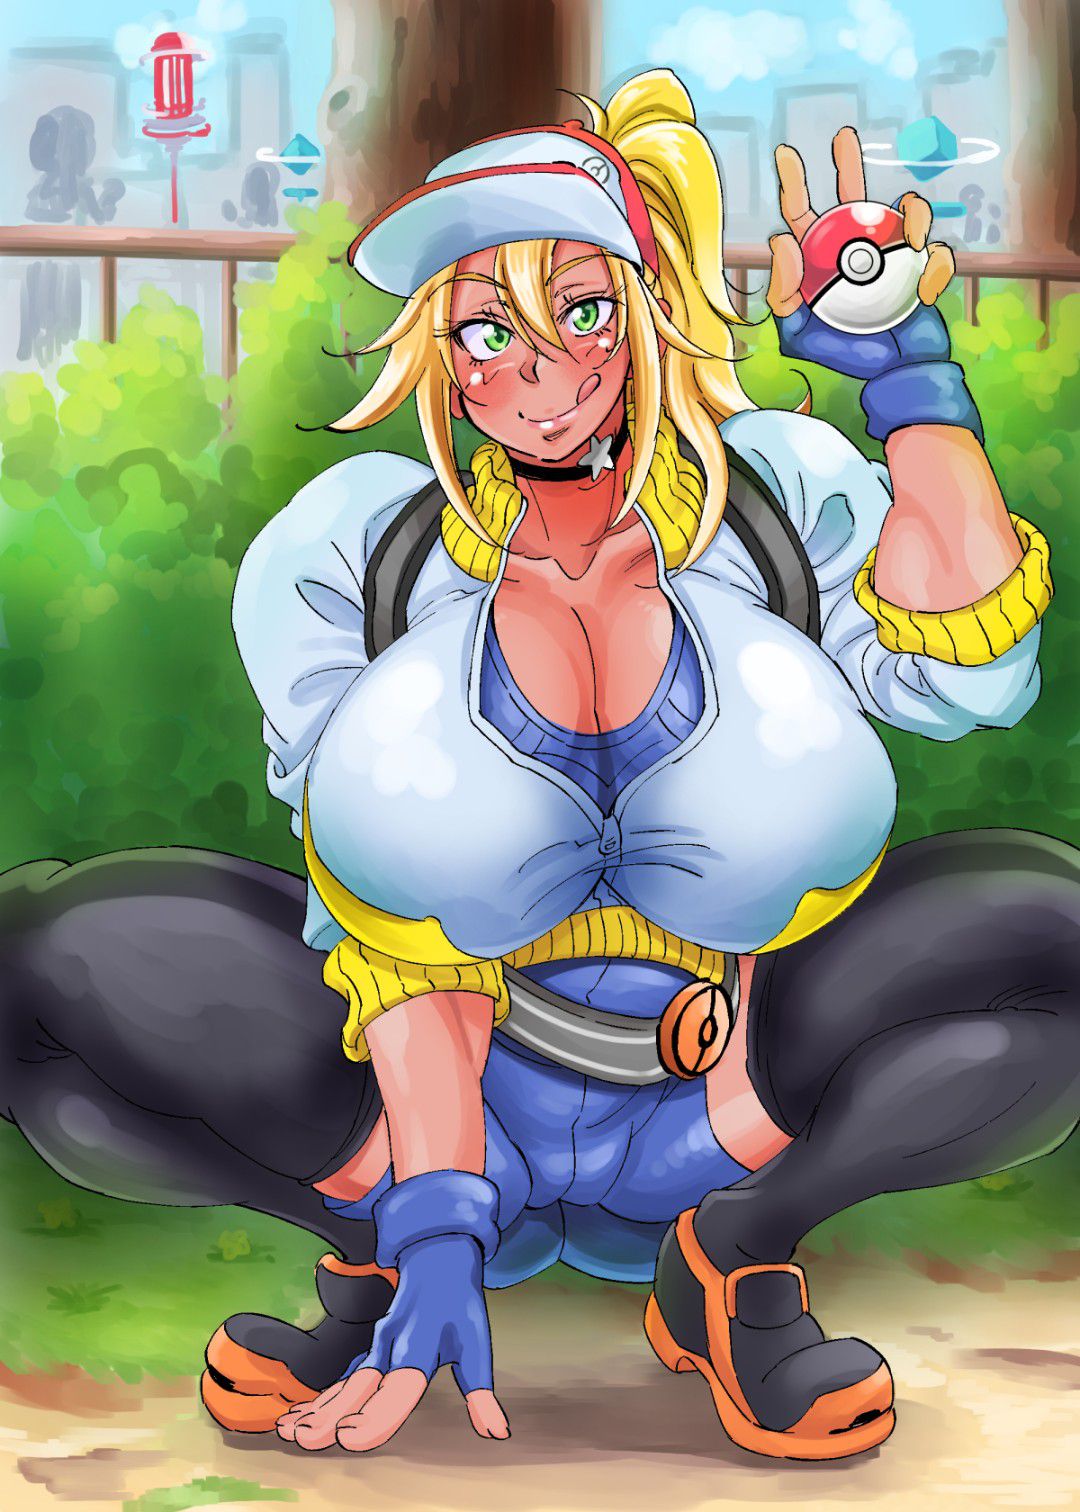 【Pocket Monsters】Hentai secondary erotic image summary of female trainer 11